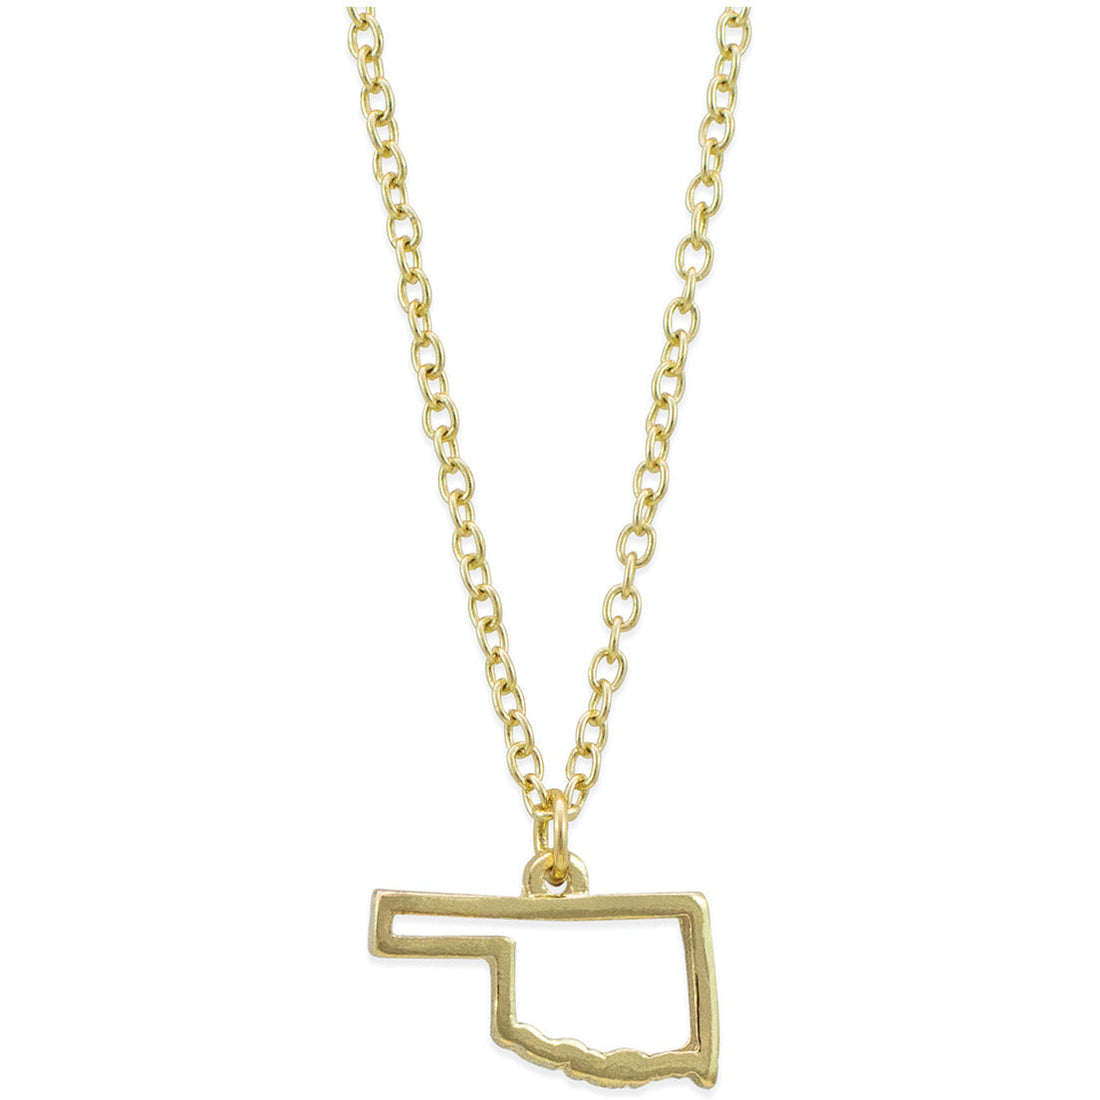 Oklahoma Necklace - Gold